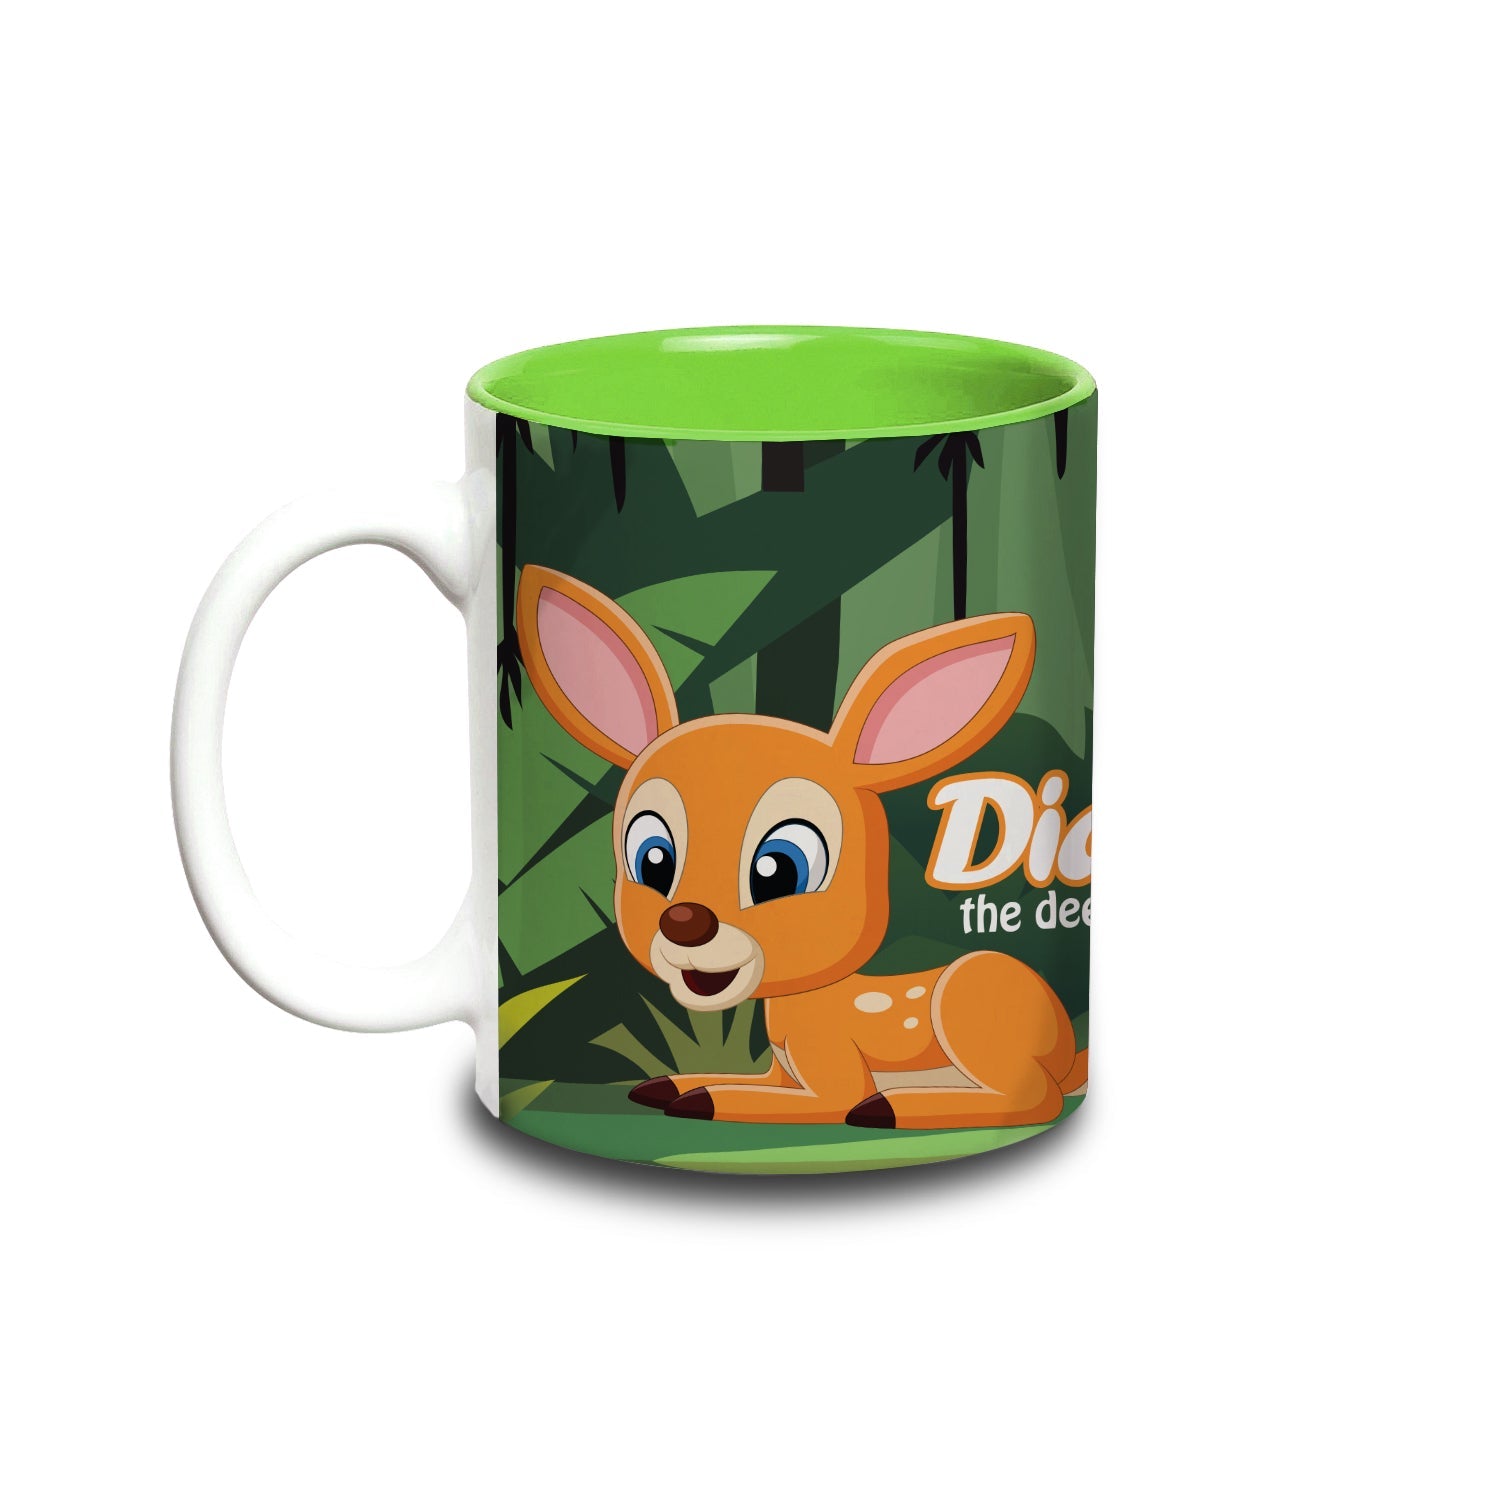 Wild Focus Kids -Dia the Deer Mug, 1pc